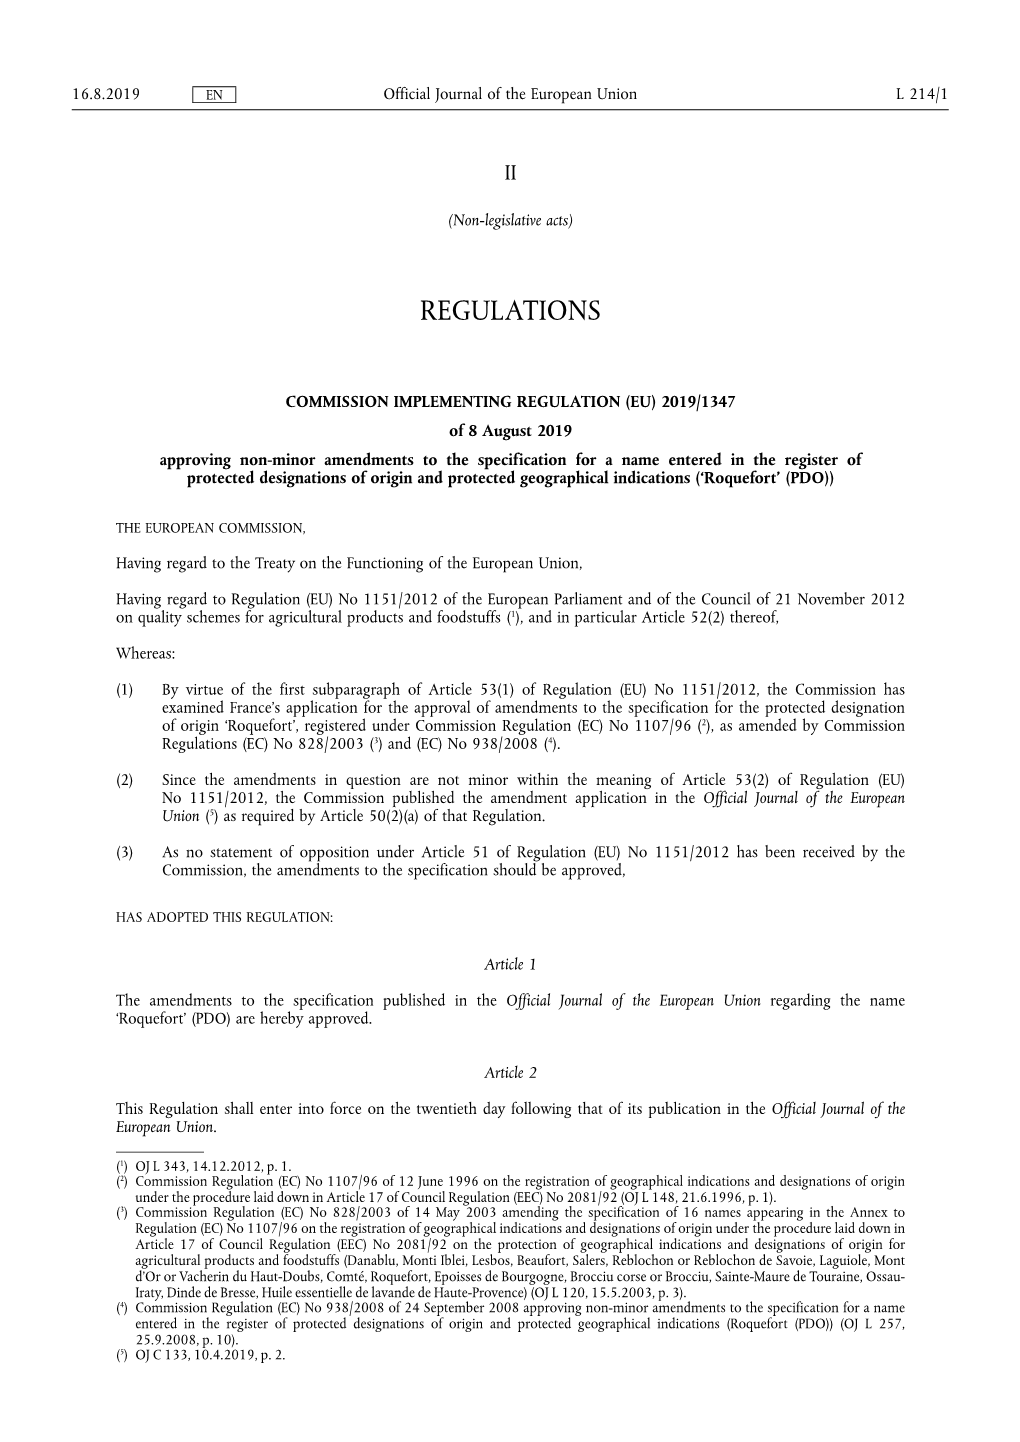 Commission Implementing Regulation (Eu) 2019